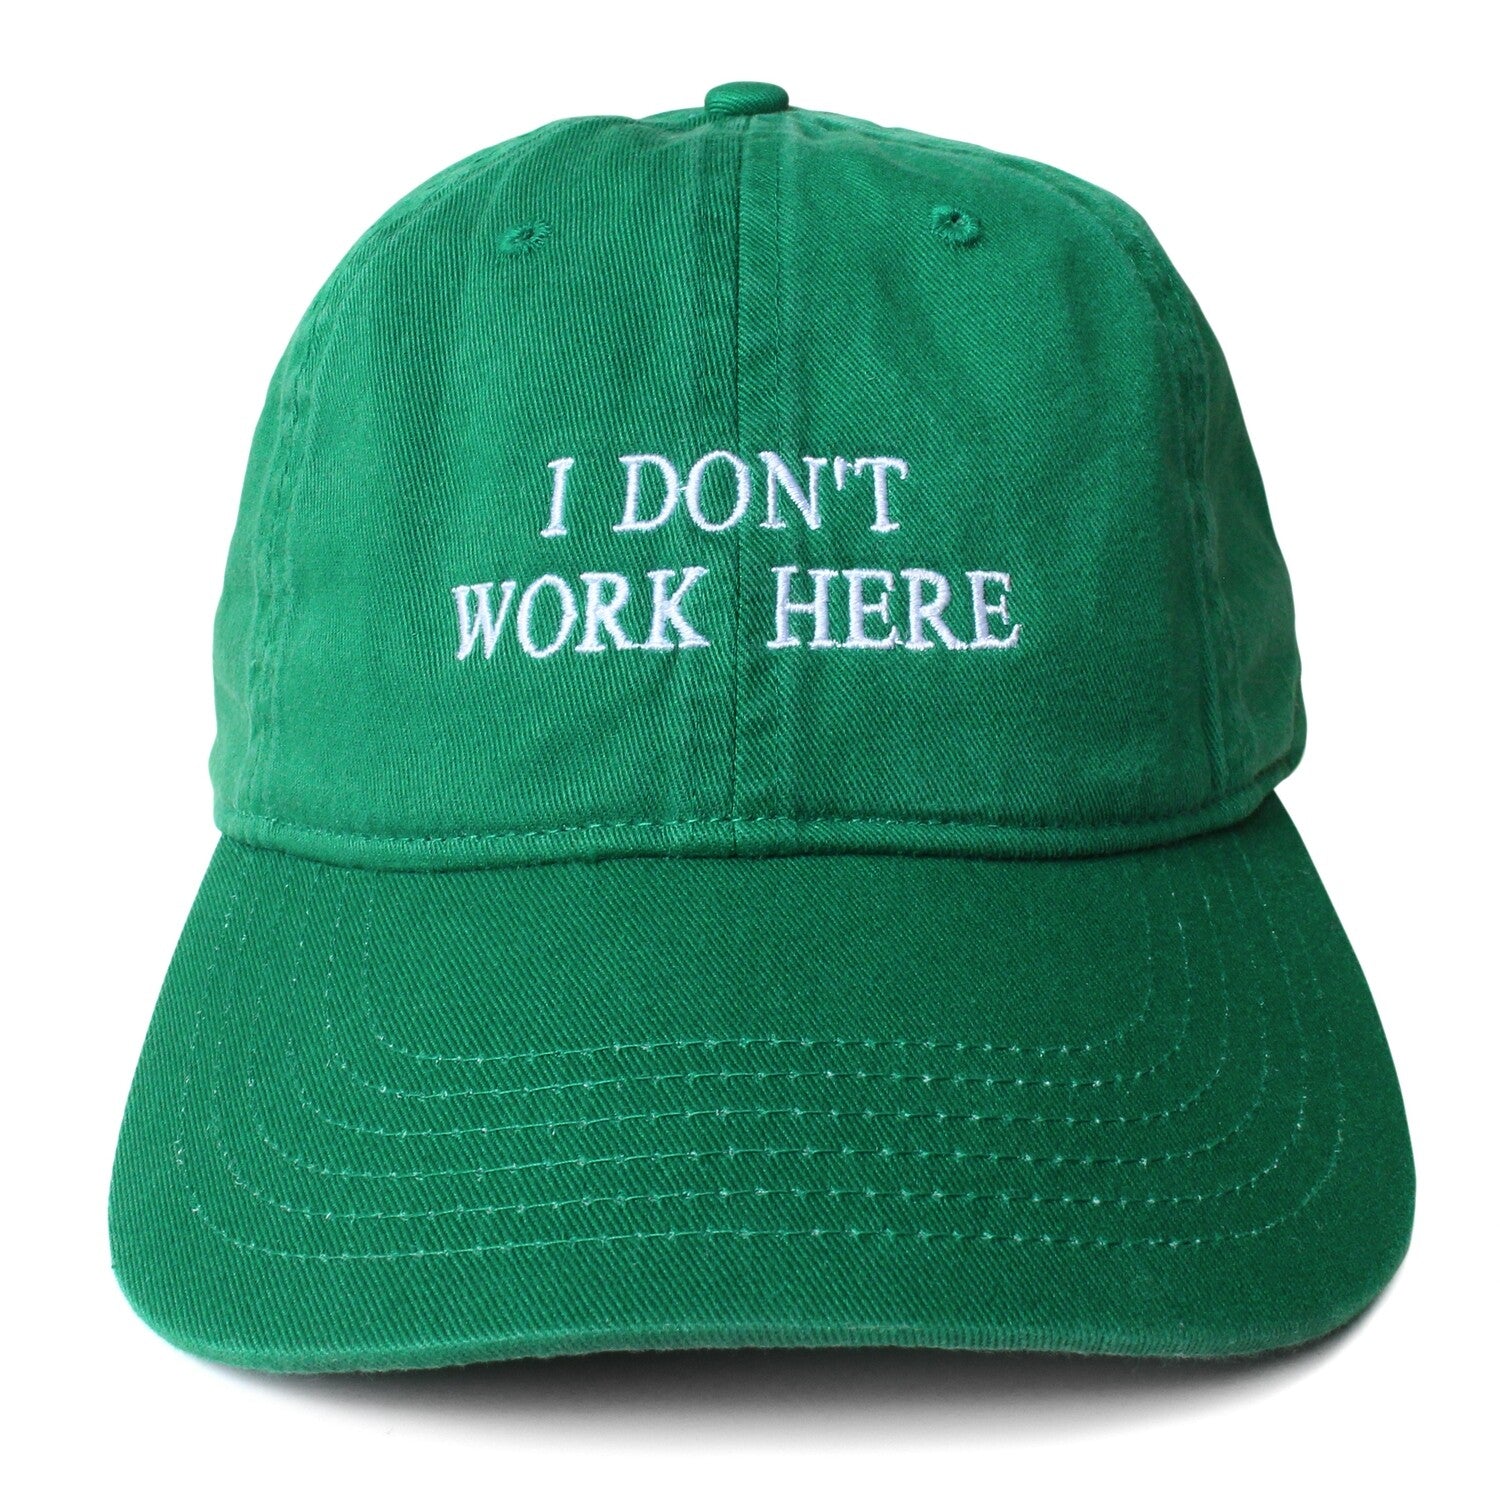 Cap - Sorry I don't work here - green